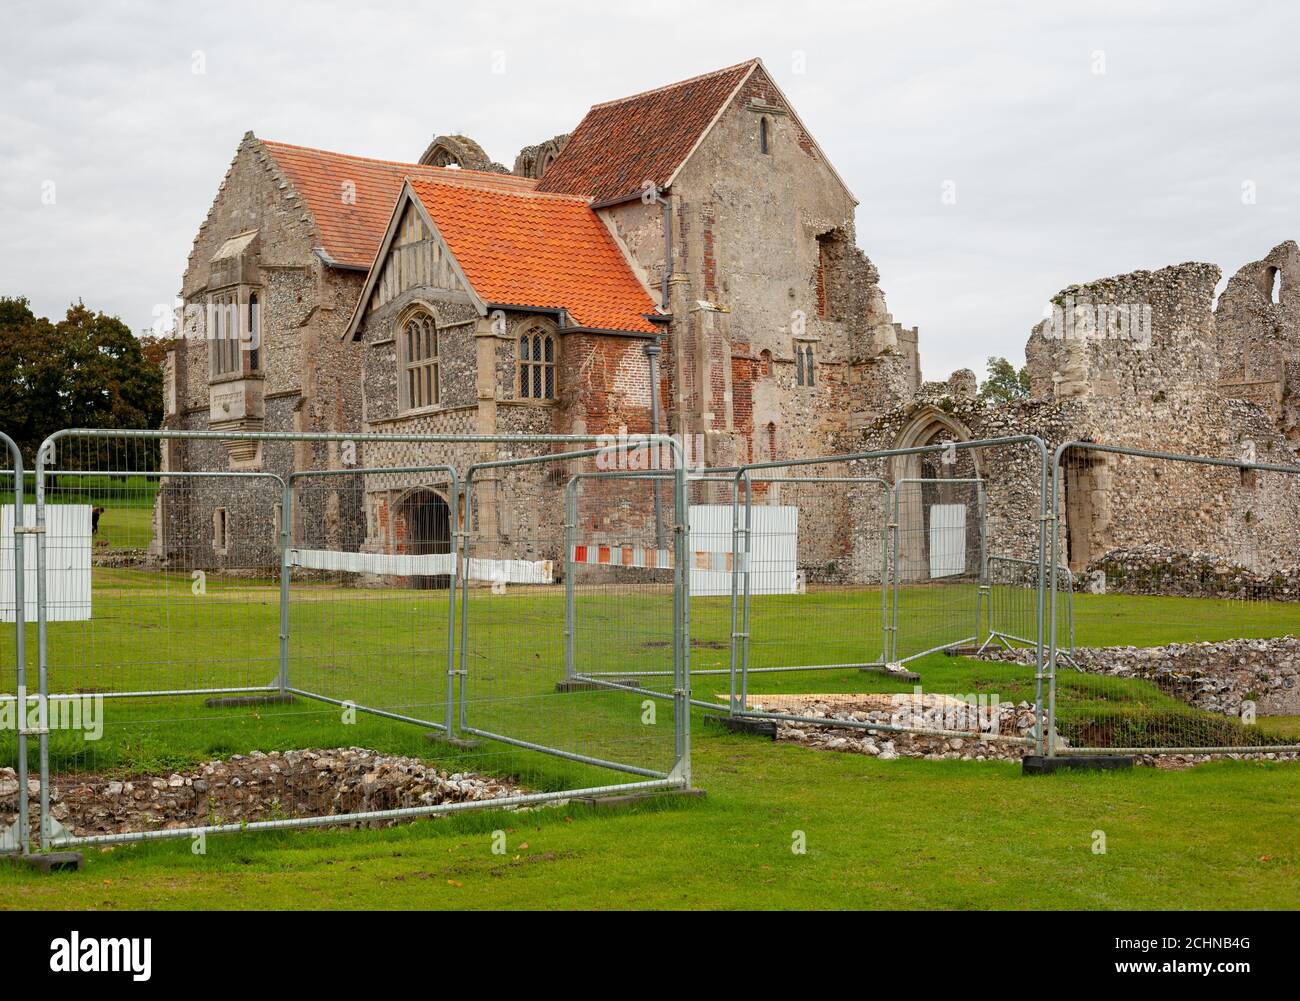 Britain's Heritage Concept - Metal Barriers Protect Site of Conservation Works an einem alten Denkmal, Castle Acre Priory, Norfolk, Großbritannien. Stockfoto